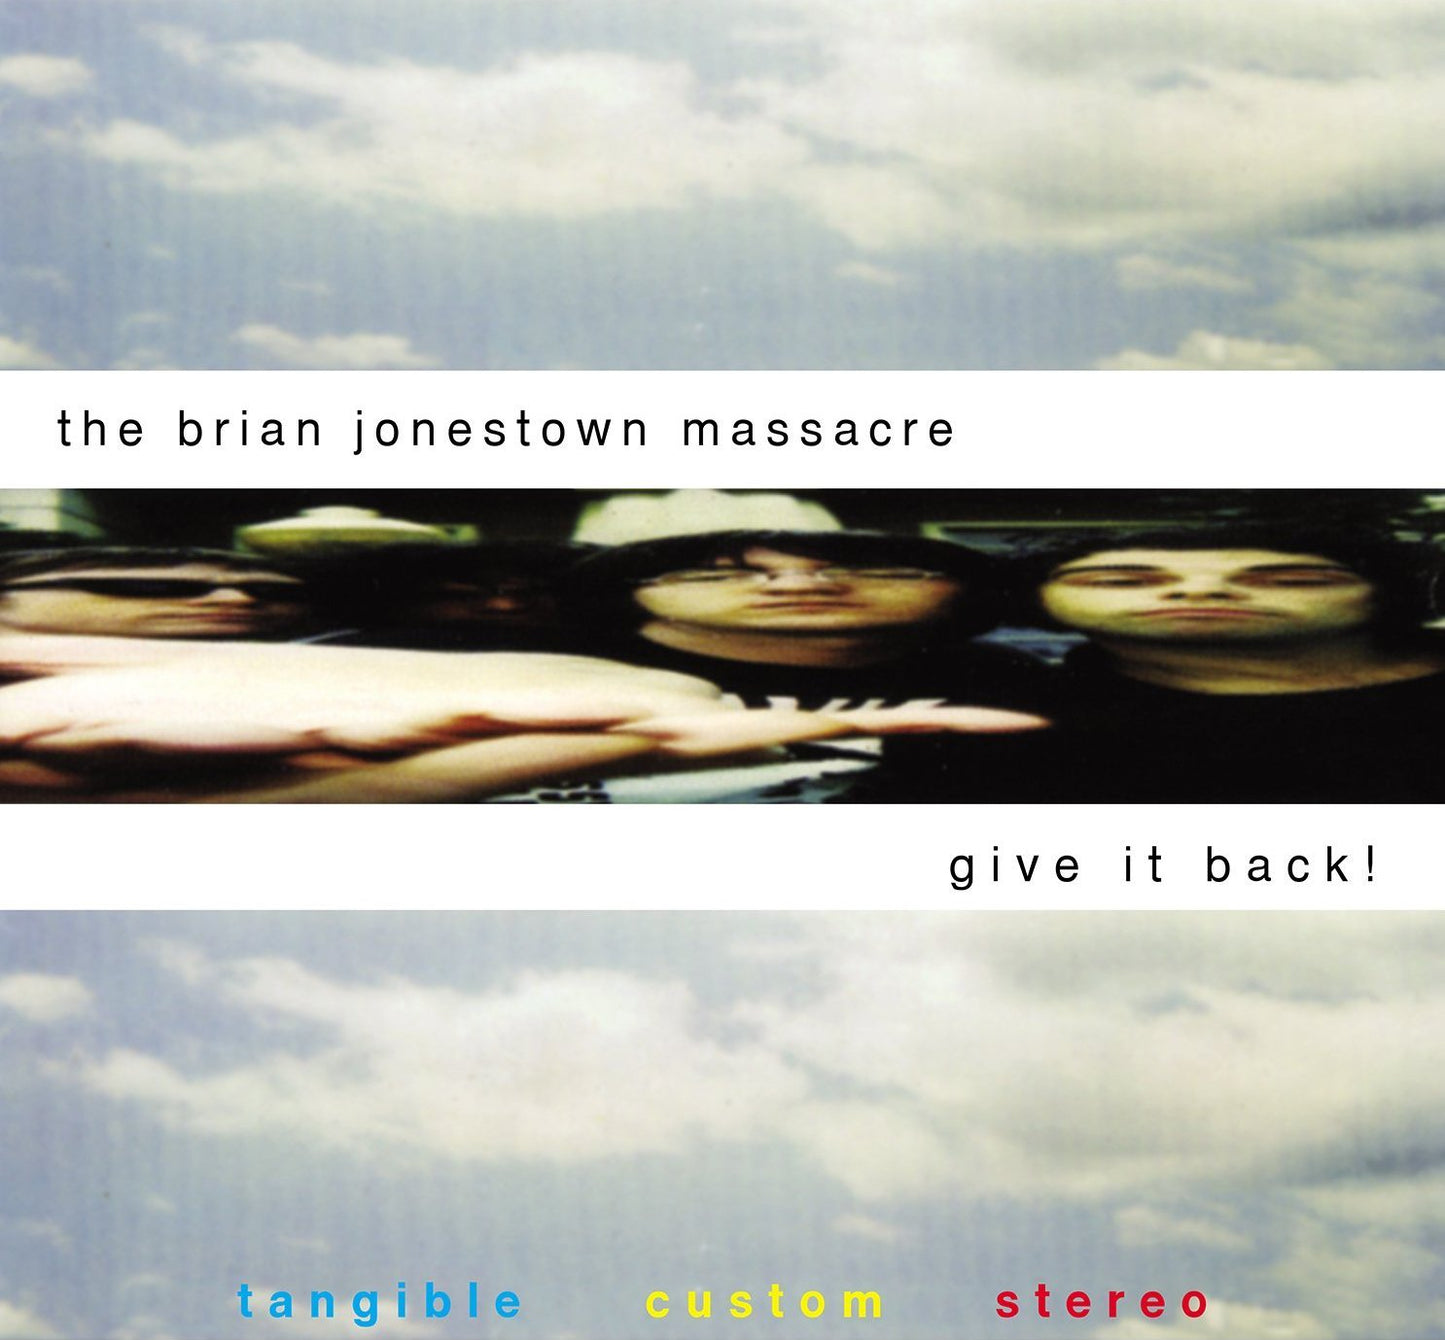 THE BRIAN JONESTOWN MASSACRE - "GIVE IT BACK!" 2LP